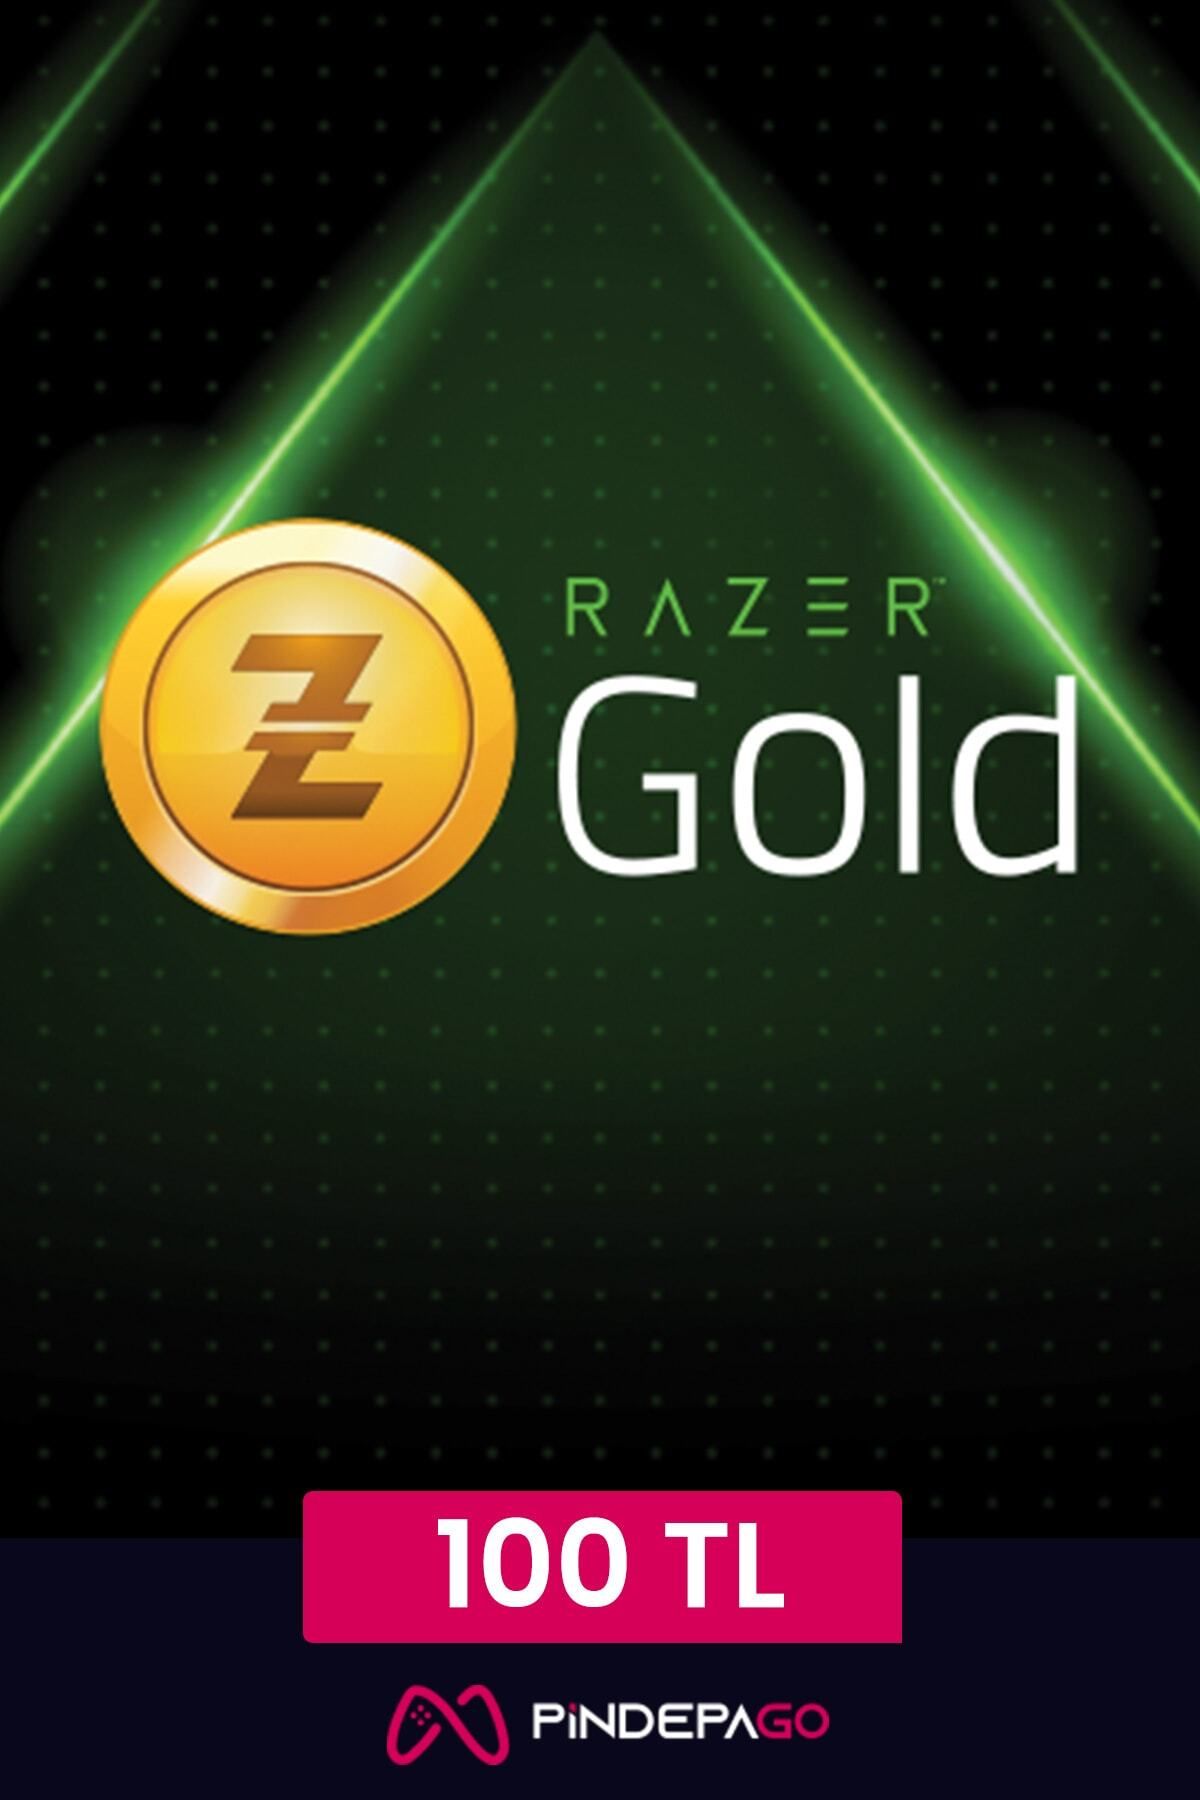 PindepaGO 100 Tl Razer Gold Pin